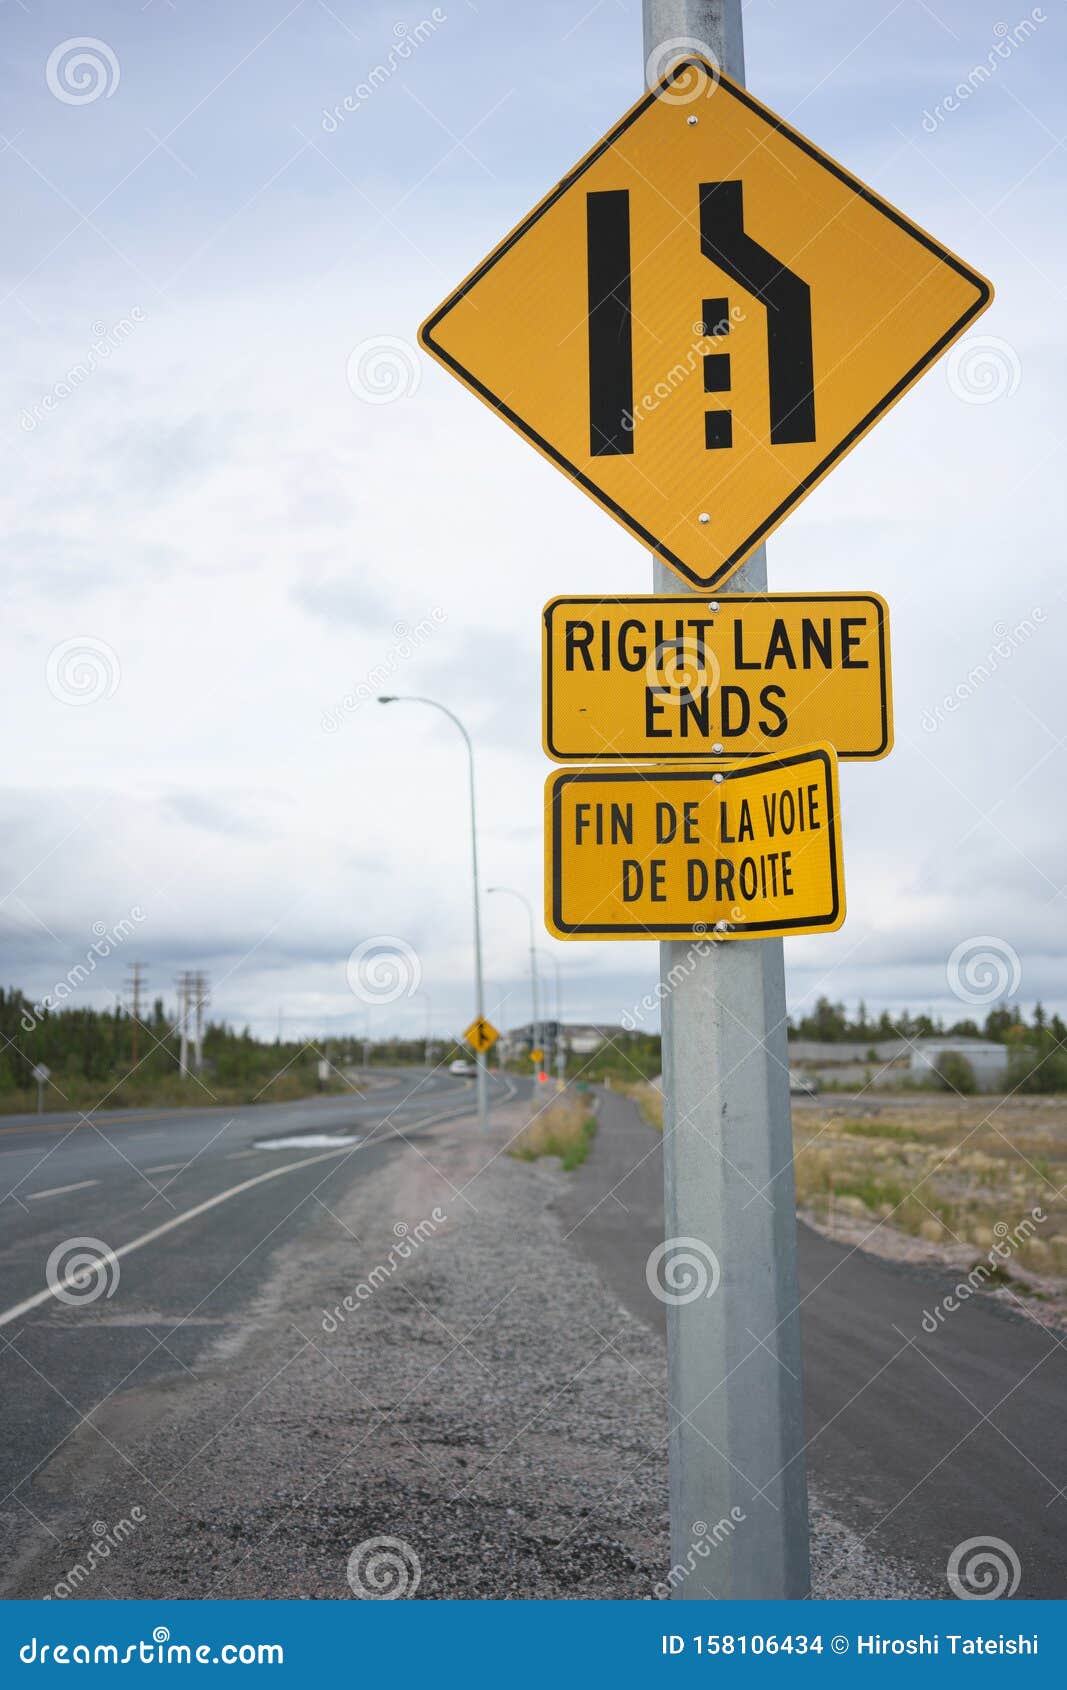 yellowknife-canada-september-right-lane-ends-sign-along-th-street-158106434.jpg